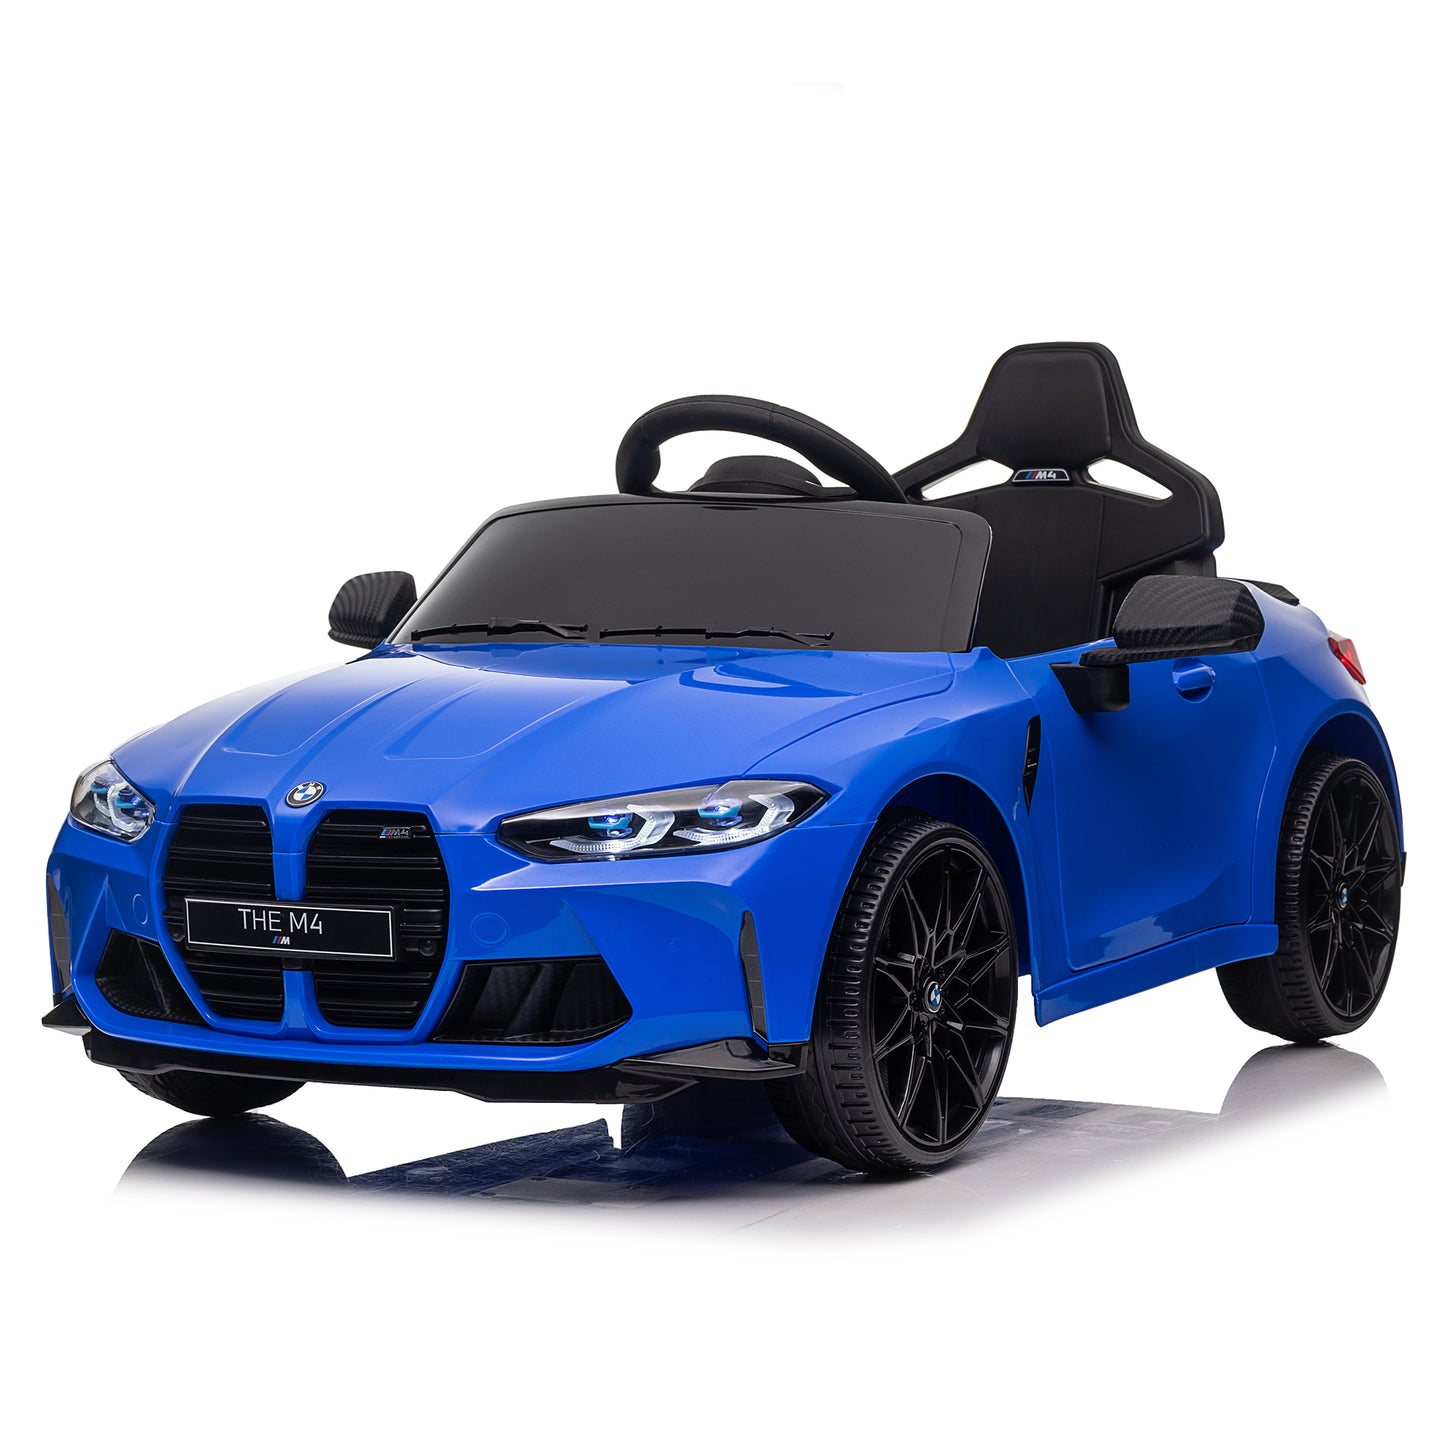 Blue BMW M4 12v Kids ride on toy car 2.4G W/Parents Remote Control Three speed adjustable